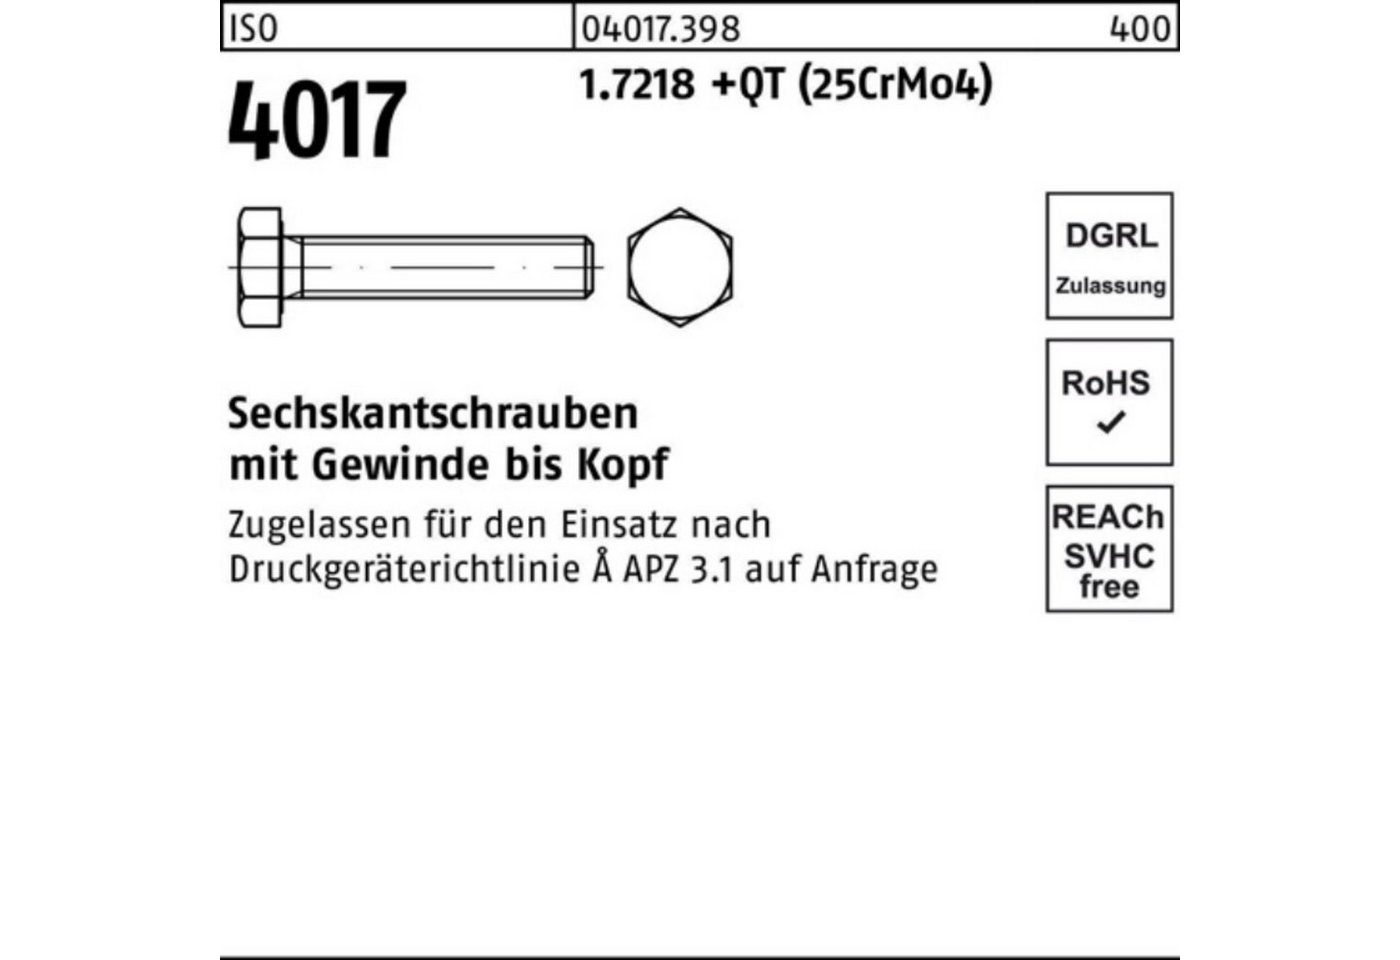 Bufab Sechskantschraube 100er Pack Sechskantschraube ISO 4017 VG M12x 25 1.7218 +QT (25CrMo4) von Bufab